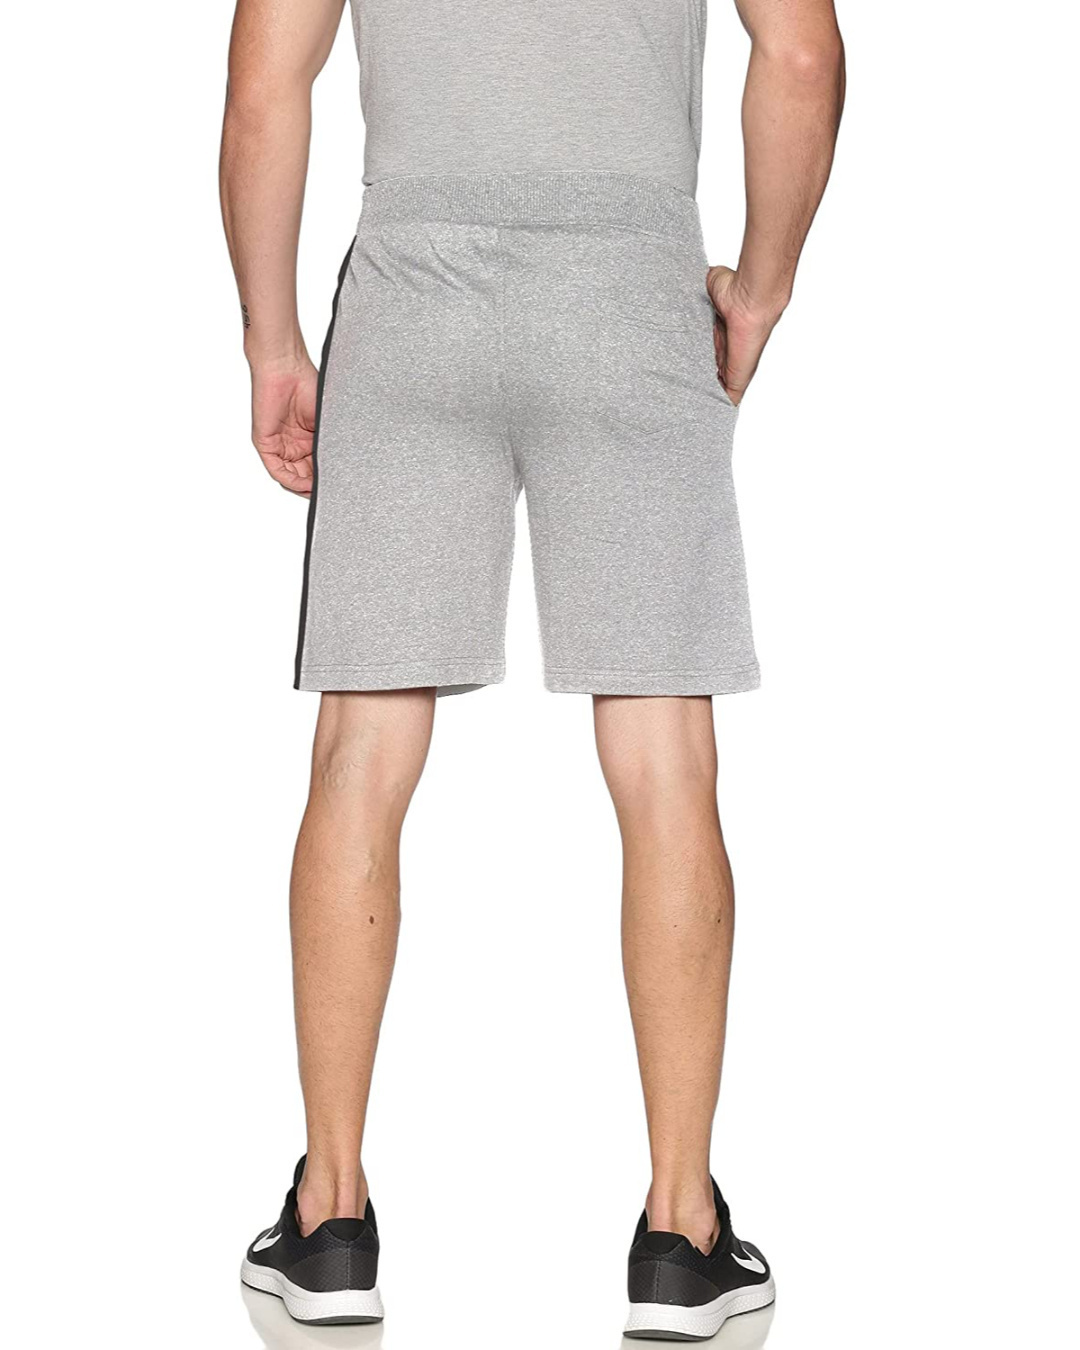 Shop Men's Grey Cotton Casual Short with Zipper Pocket-Back